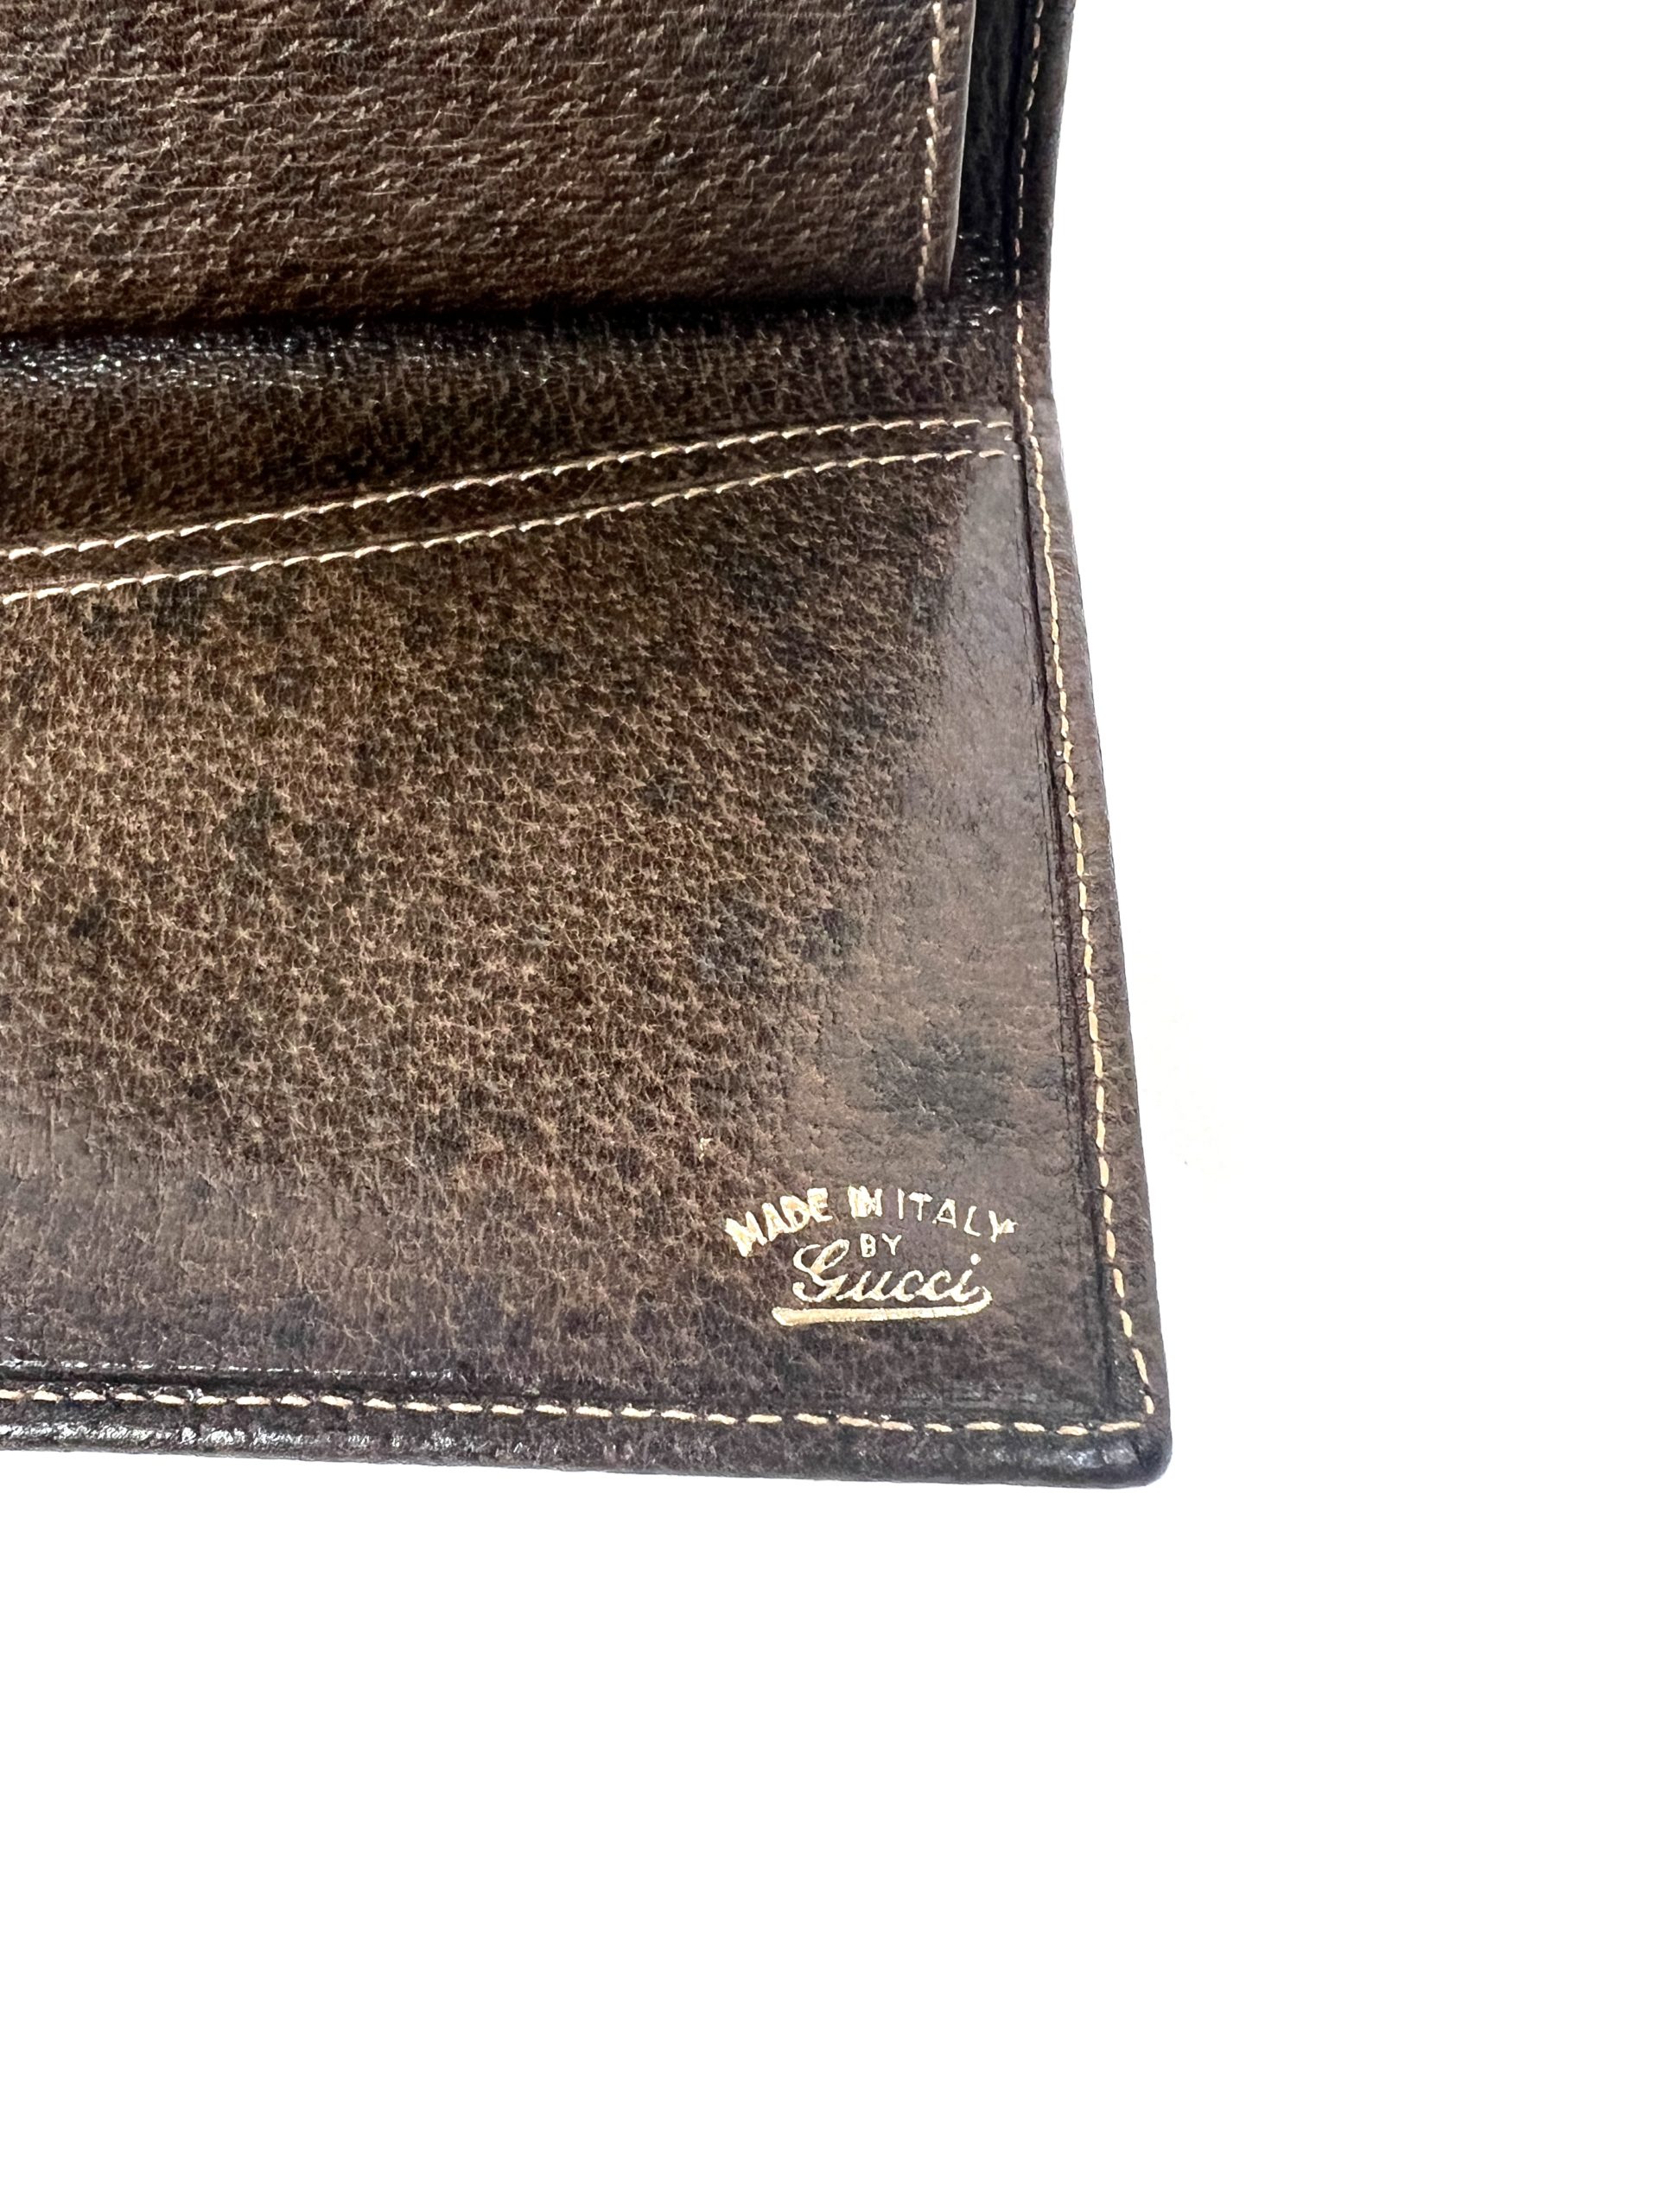 Gucci Vintage Bifold Long Wallet